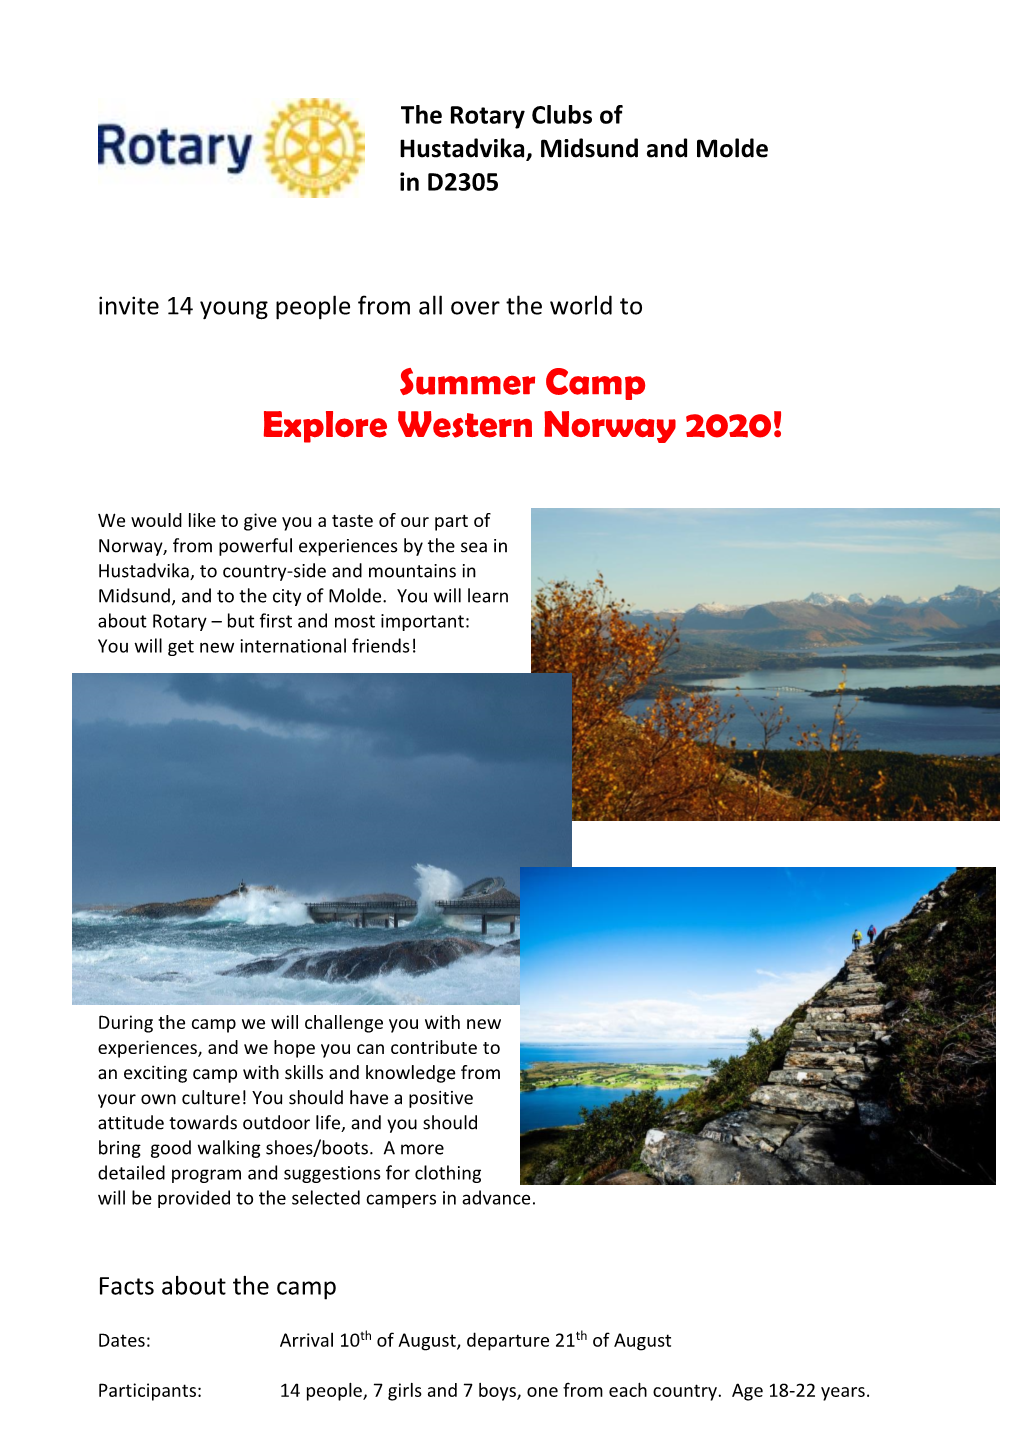 Summer Camp Explore Western Norway 2020!